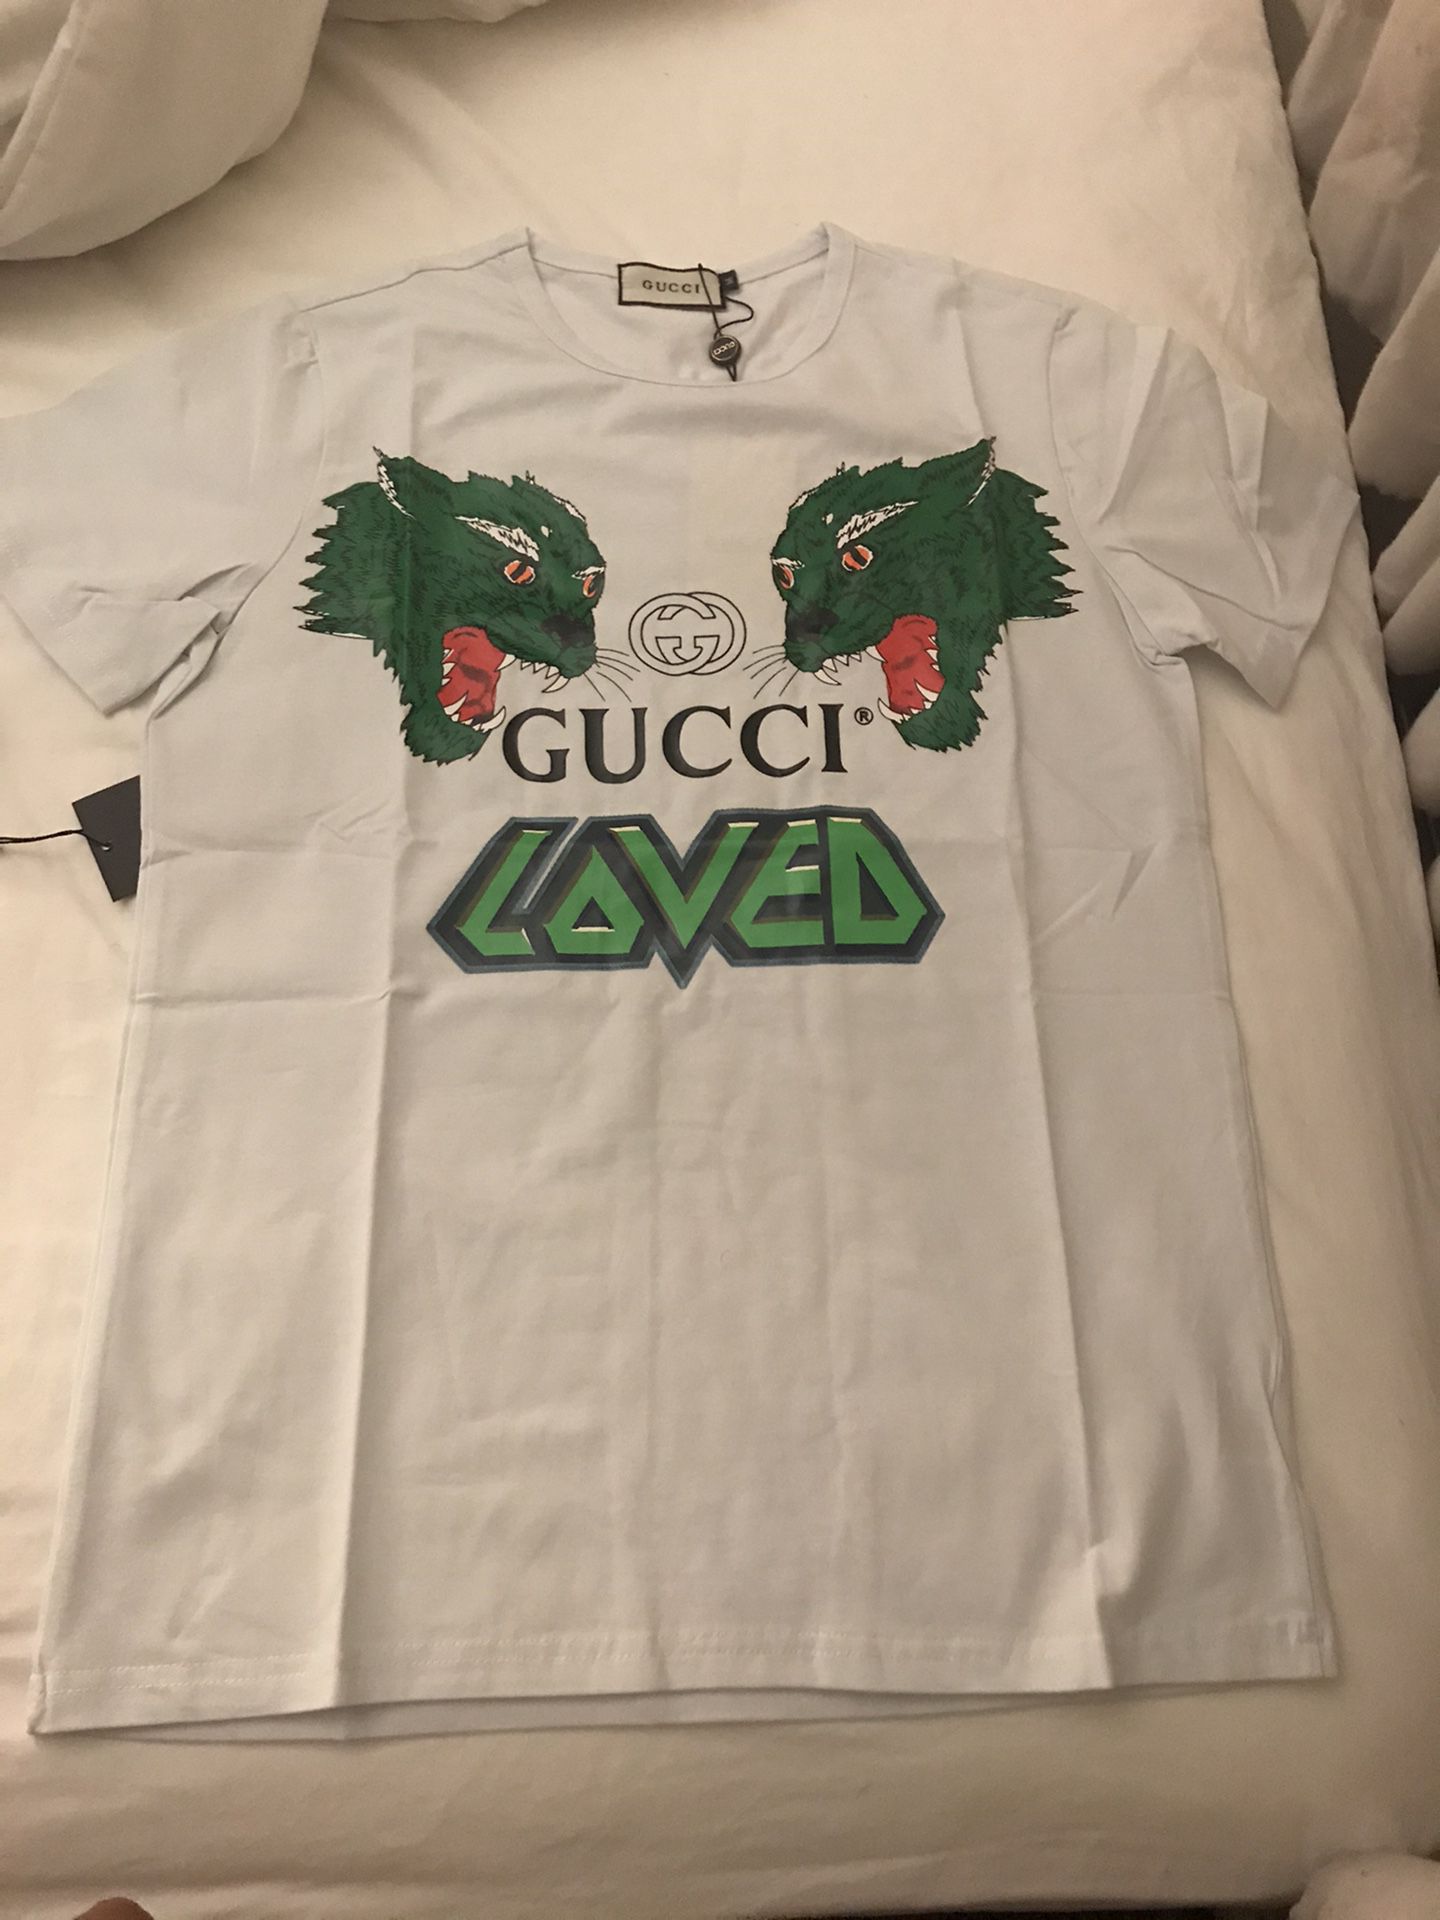 Gucci shirt